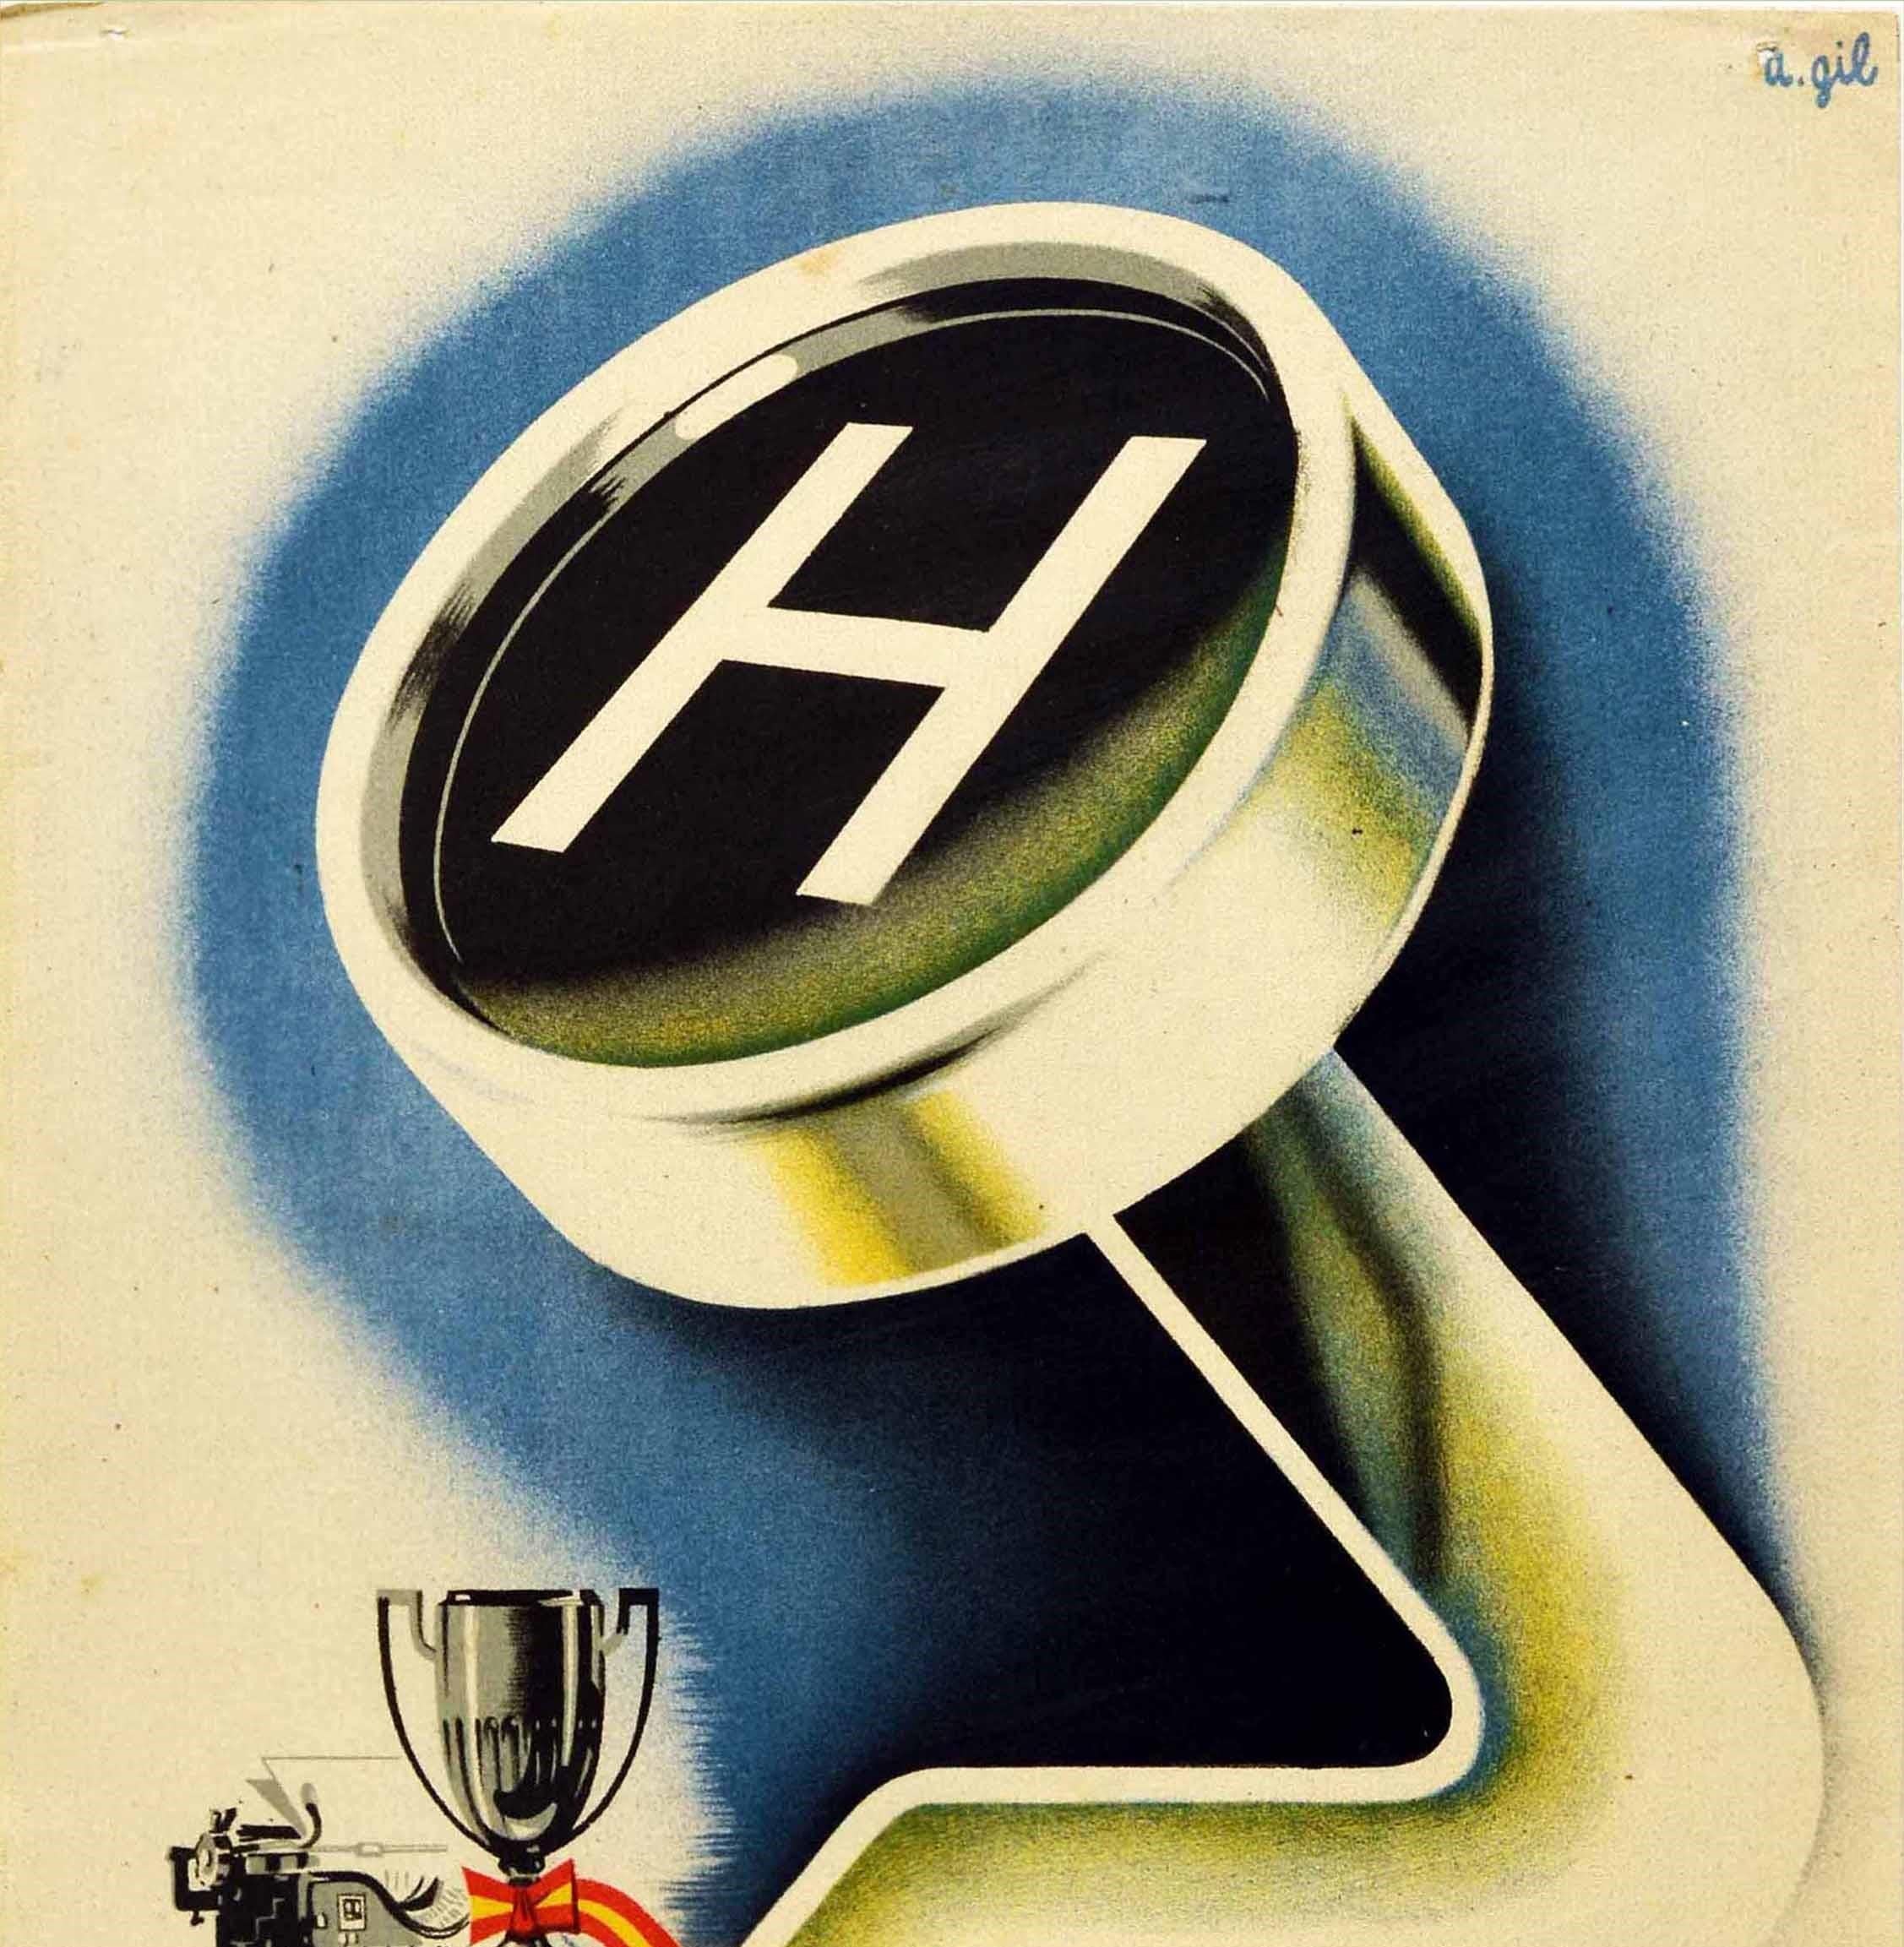 Original Vintage Poster IV Mecanografia Typing Championship Hispano Olivetti - H - Print by Unknown